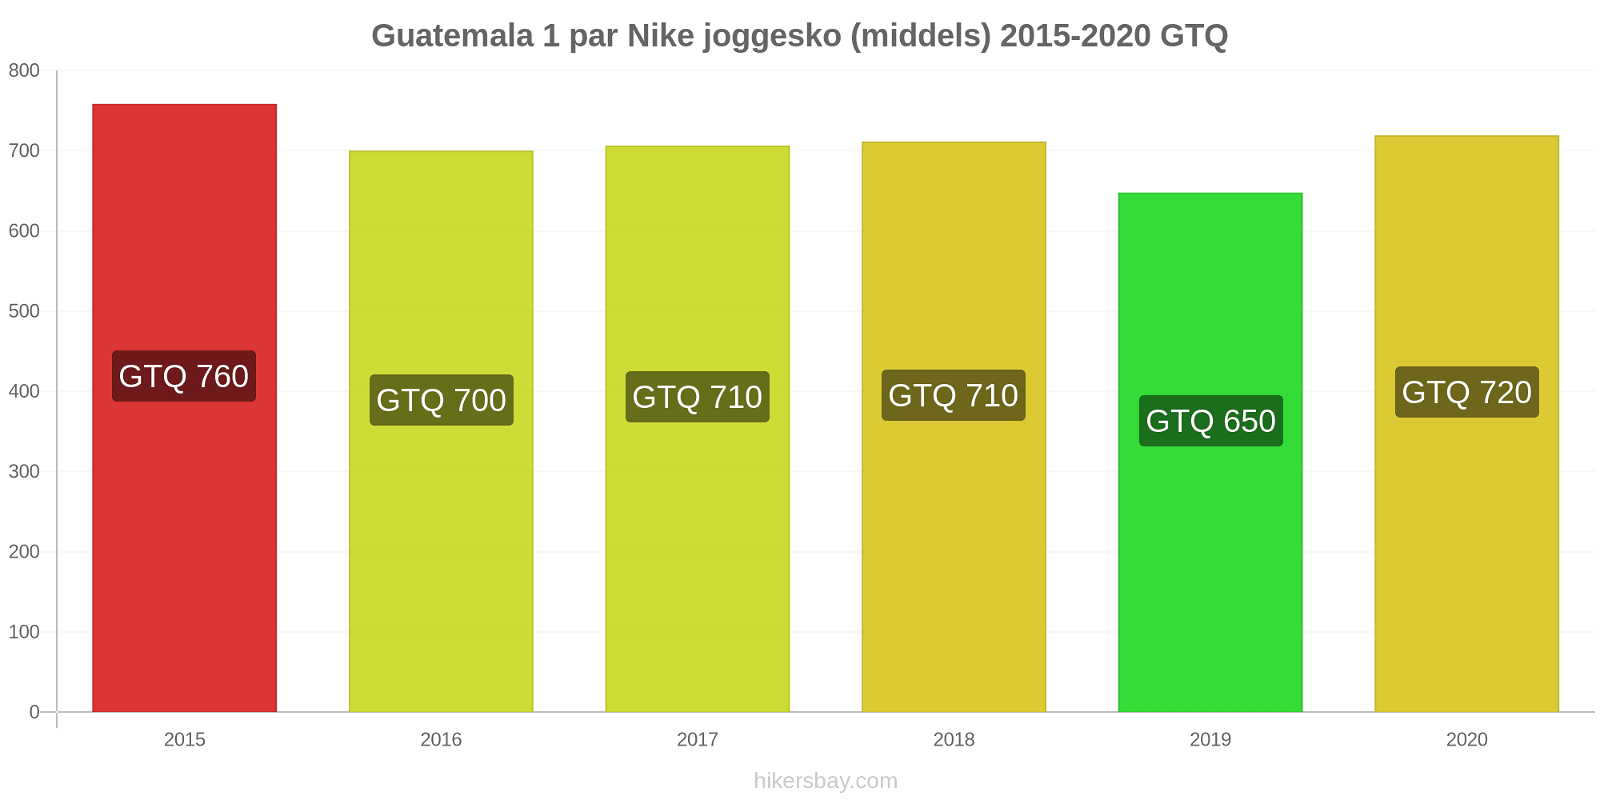 Guatemala prisendringer 1 par Nike joggesko (middels) hikersbay.com